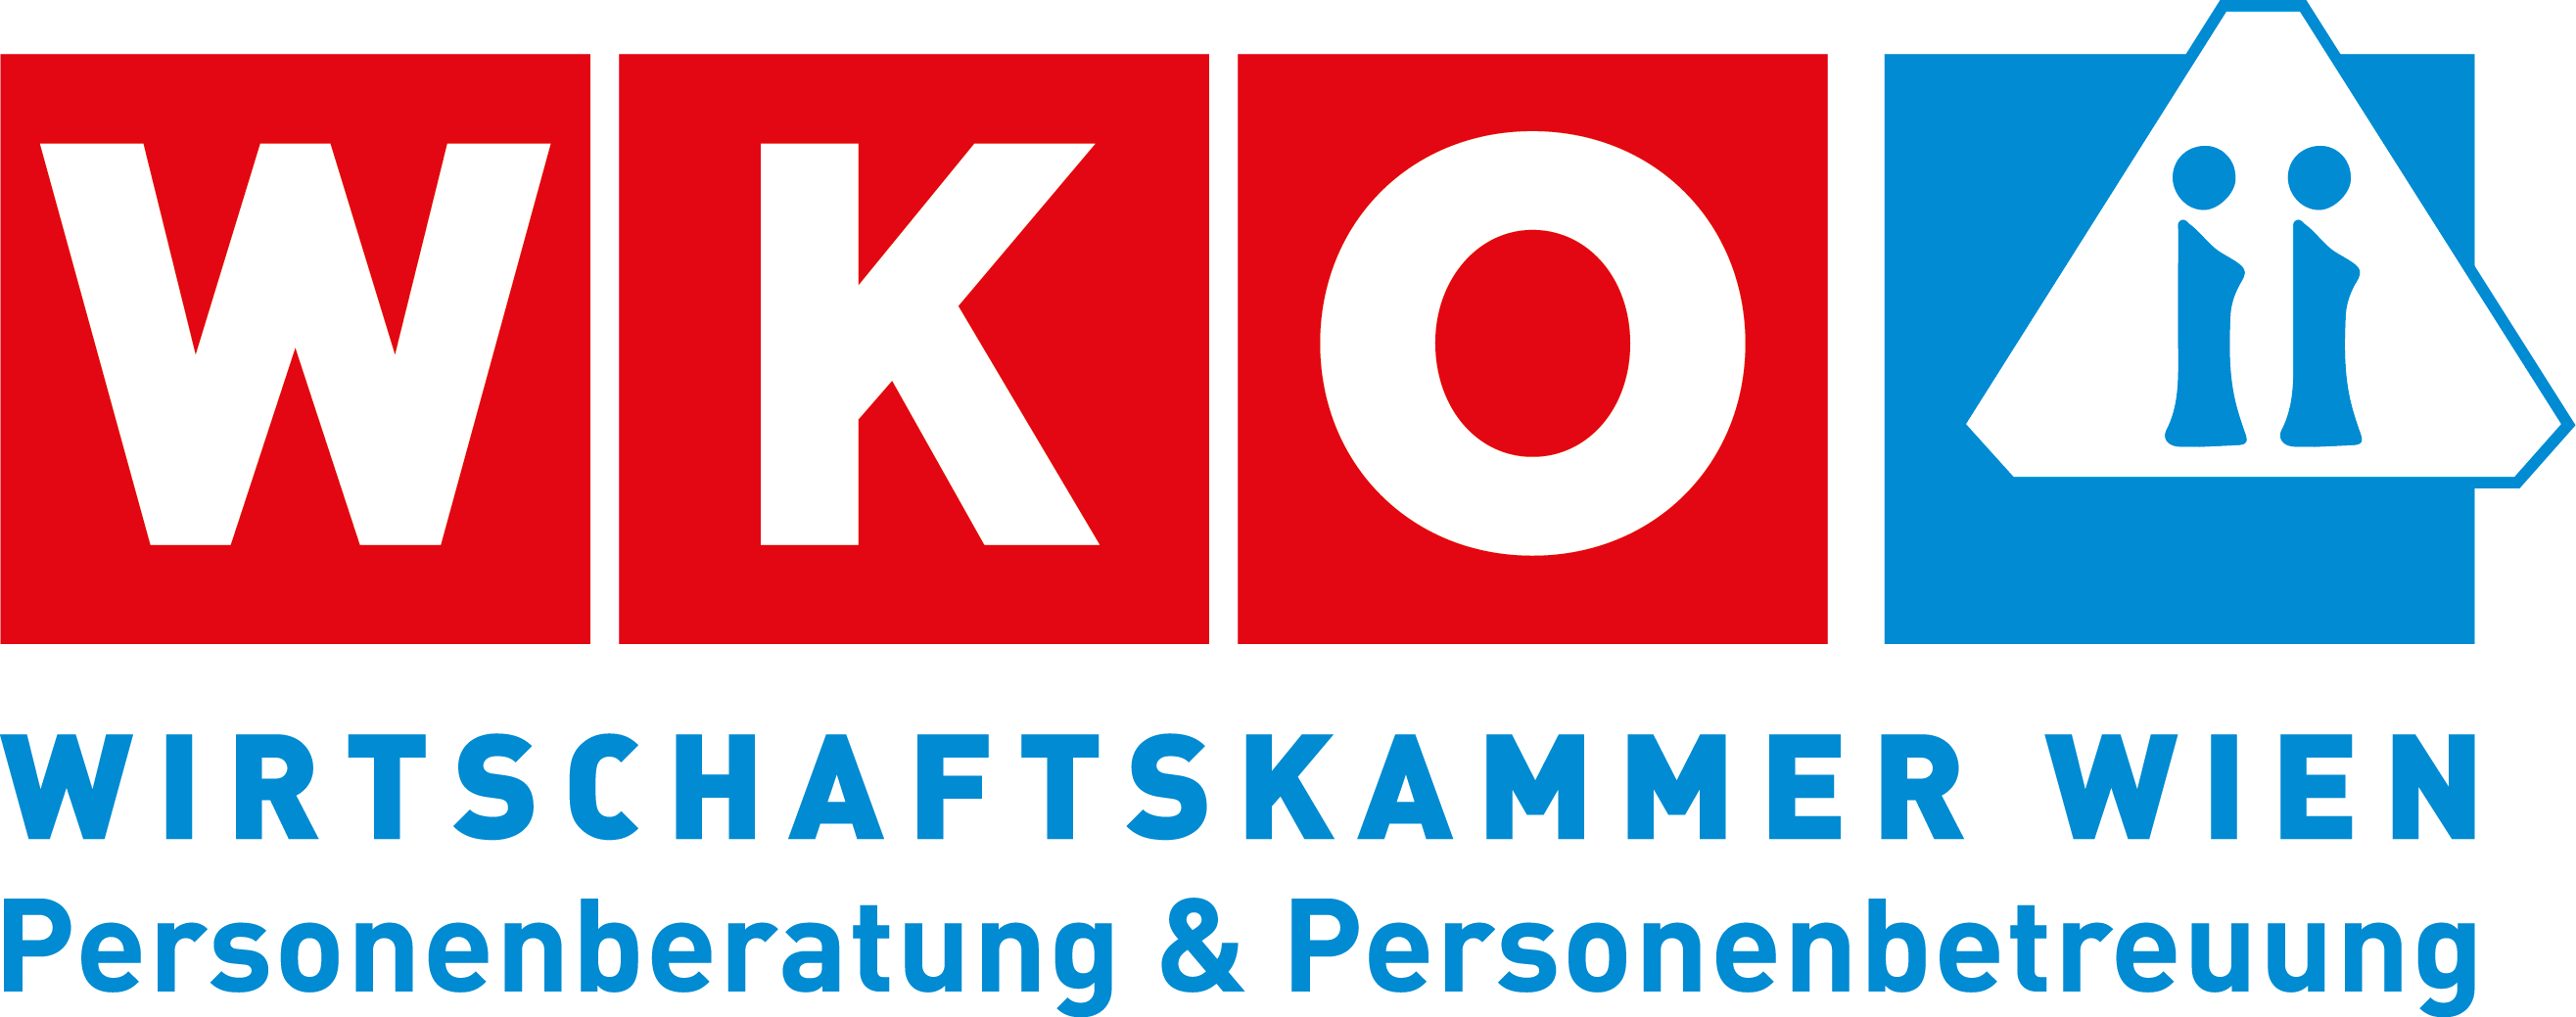 Logo Wko Personenberatung Betreuung